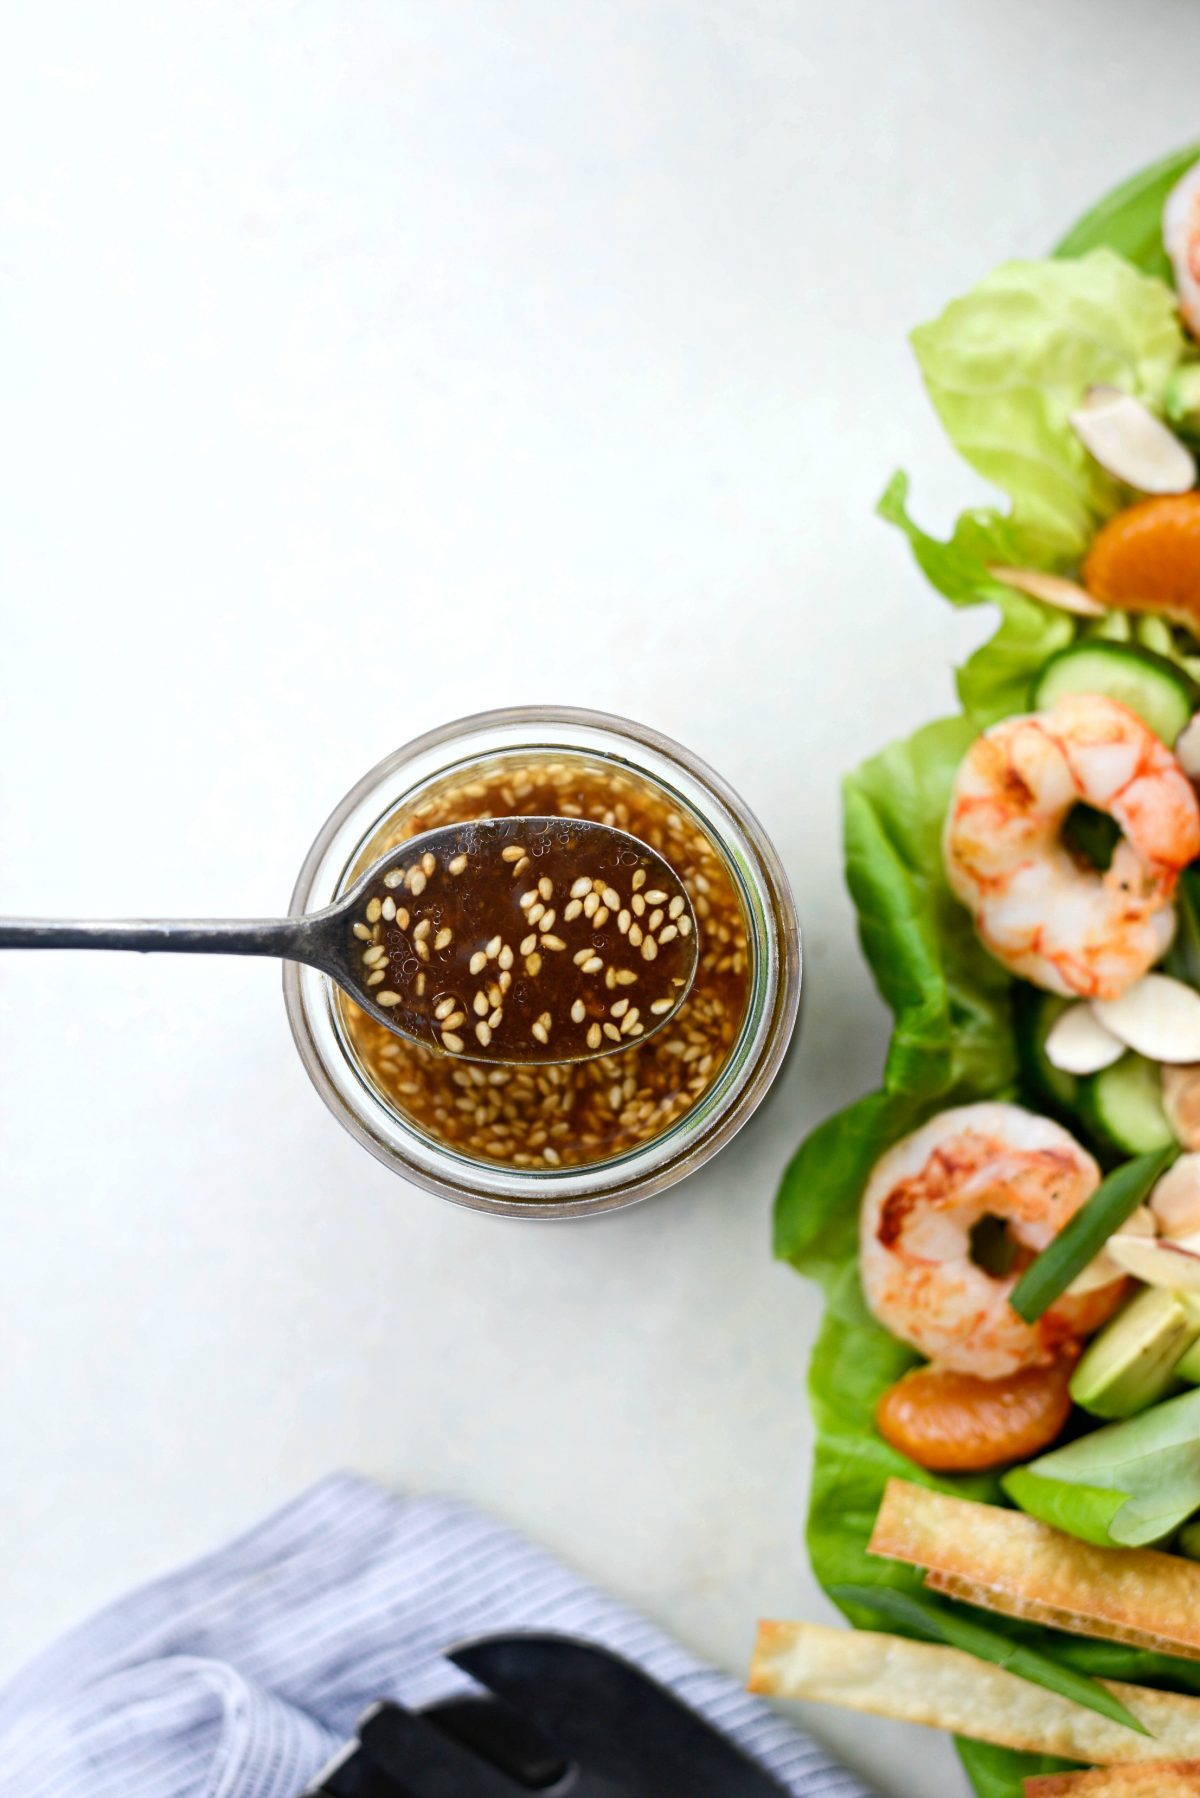 Grilled Asian Shrimp Salad with Crispy Wontons l SimplyScratch.com #shrimp #asian #salad #crispy #wonton #mandarin #oranges #toastedsesame #dressing #avocado